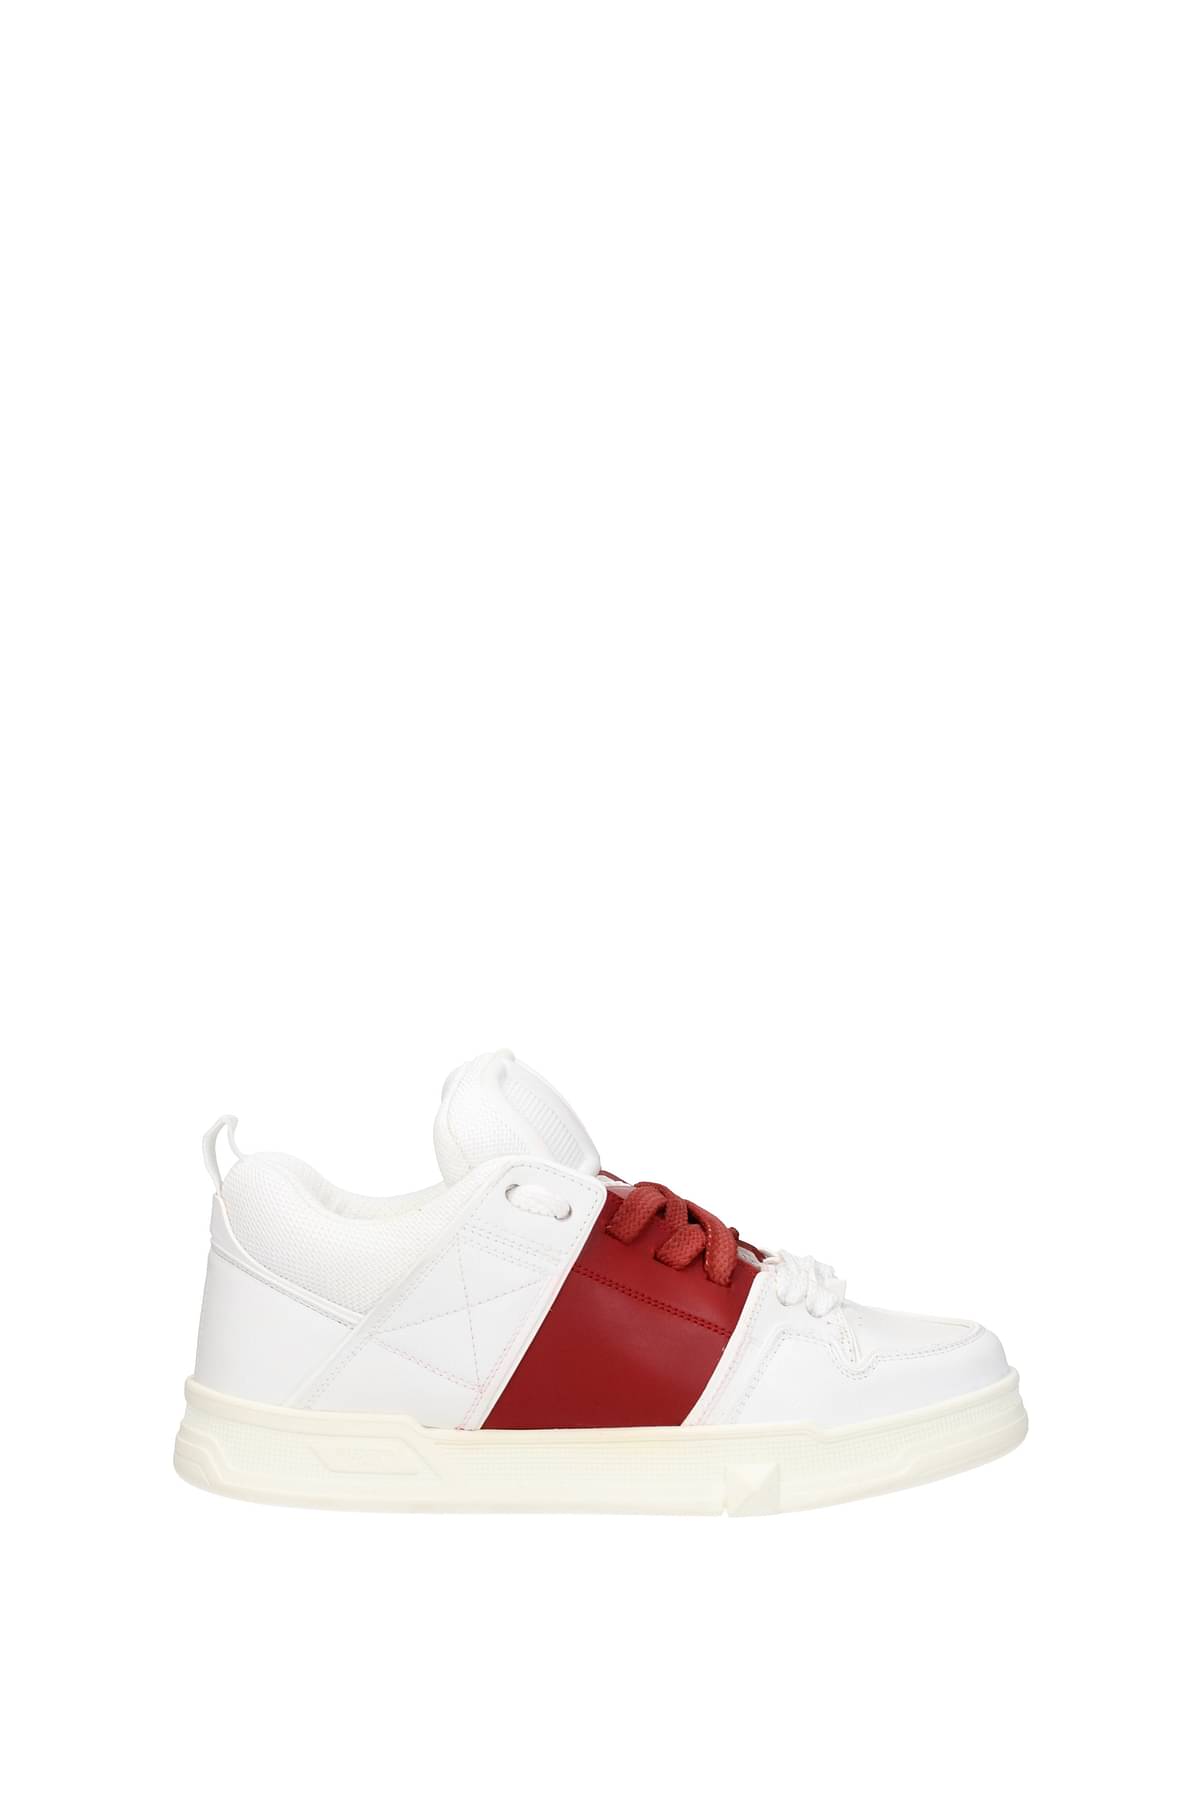 Valentino Garavani Sneakers S0FB1YPBR81 White Red 393,75€